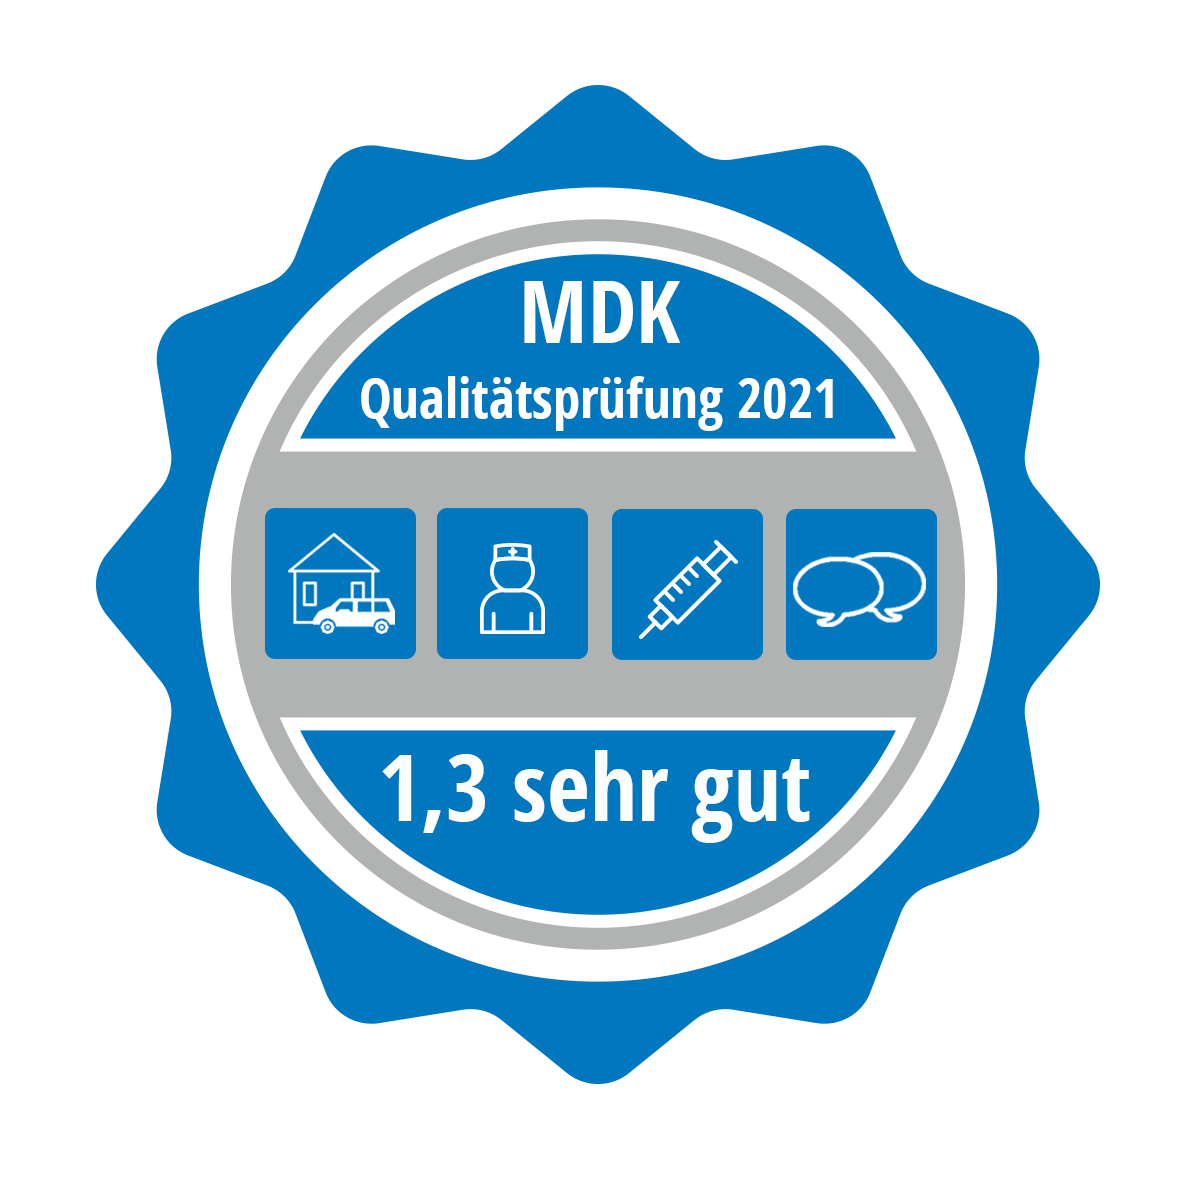 MDK Qualitätsprüfung 2021